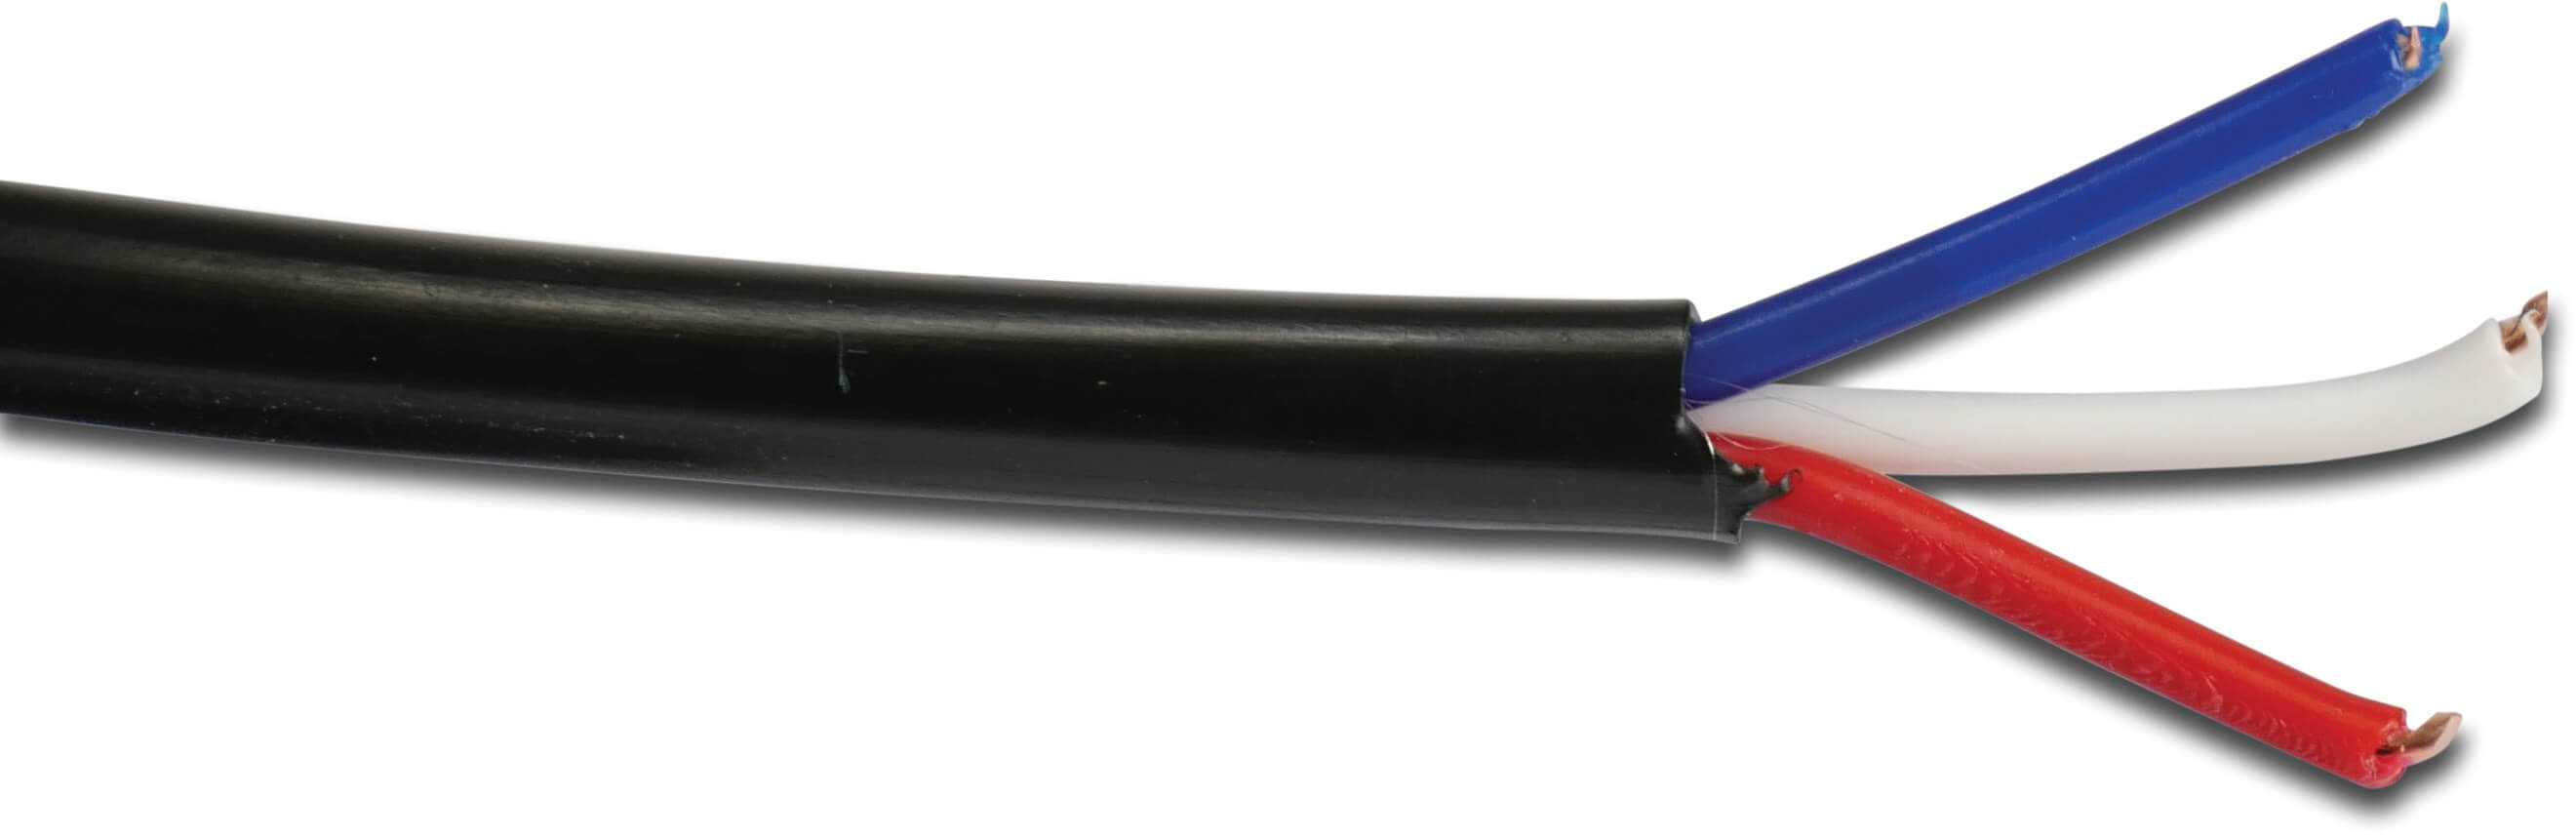 Stromkabel Kupfer Schwarz 50m type 3 x 0,75mm² 3 colour coded conductors